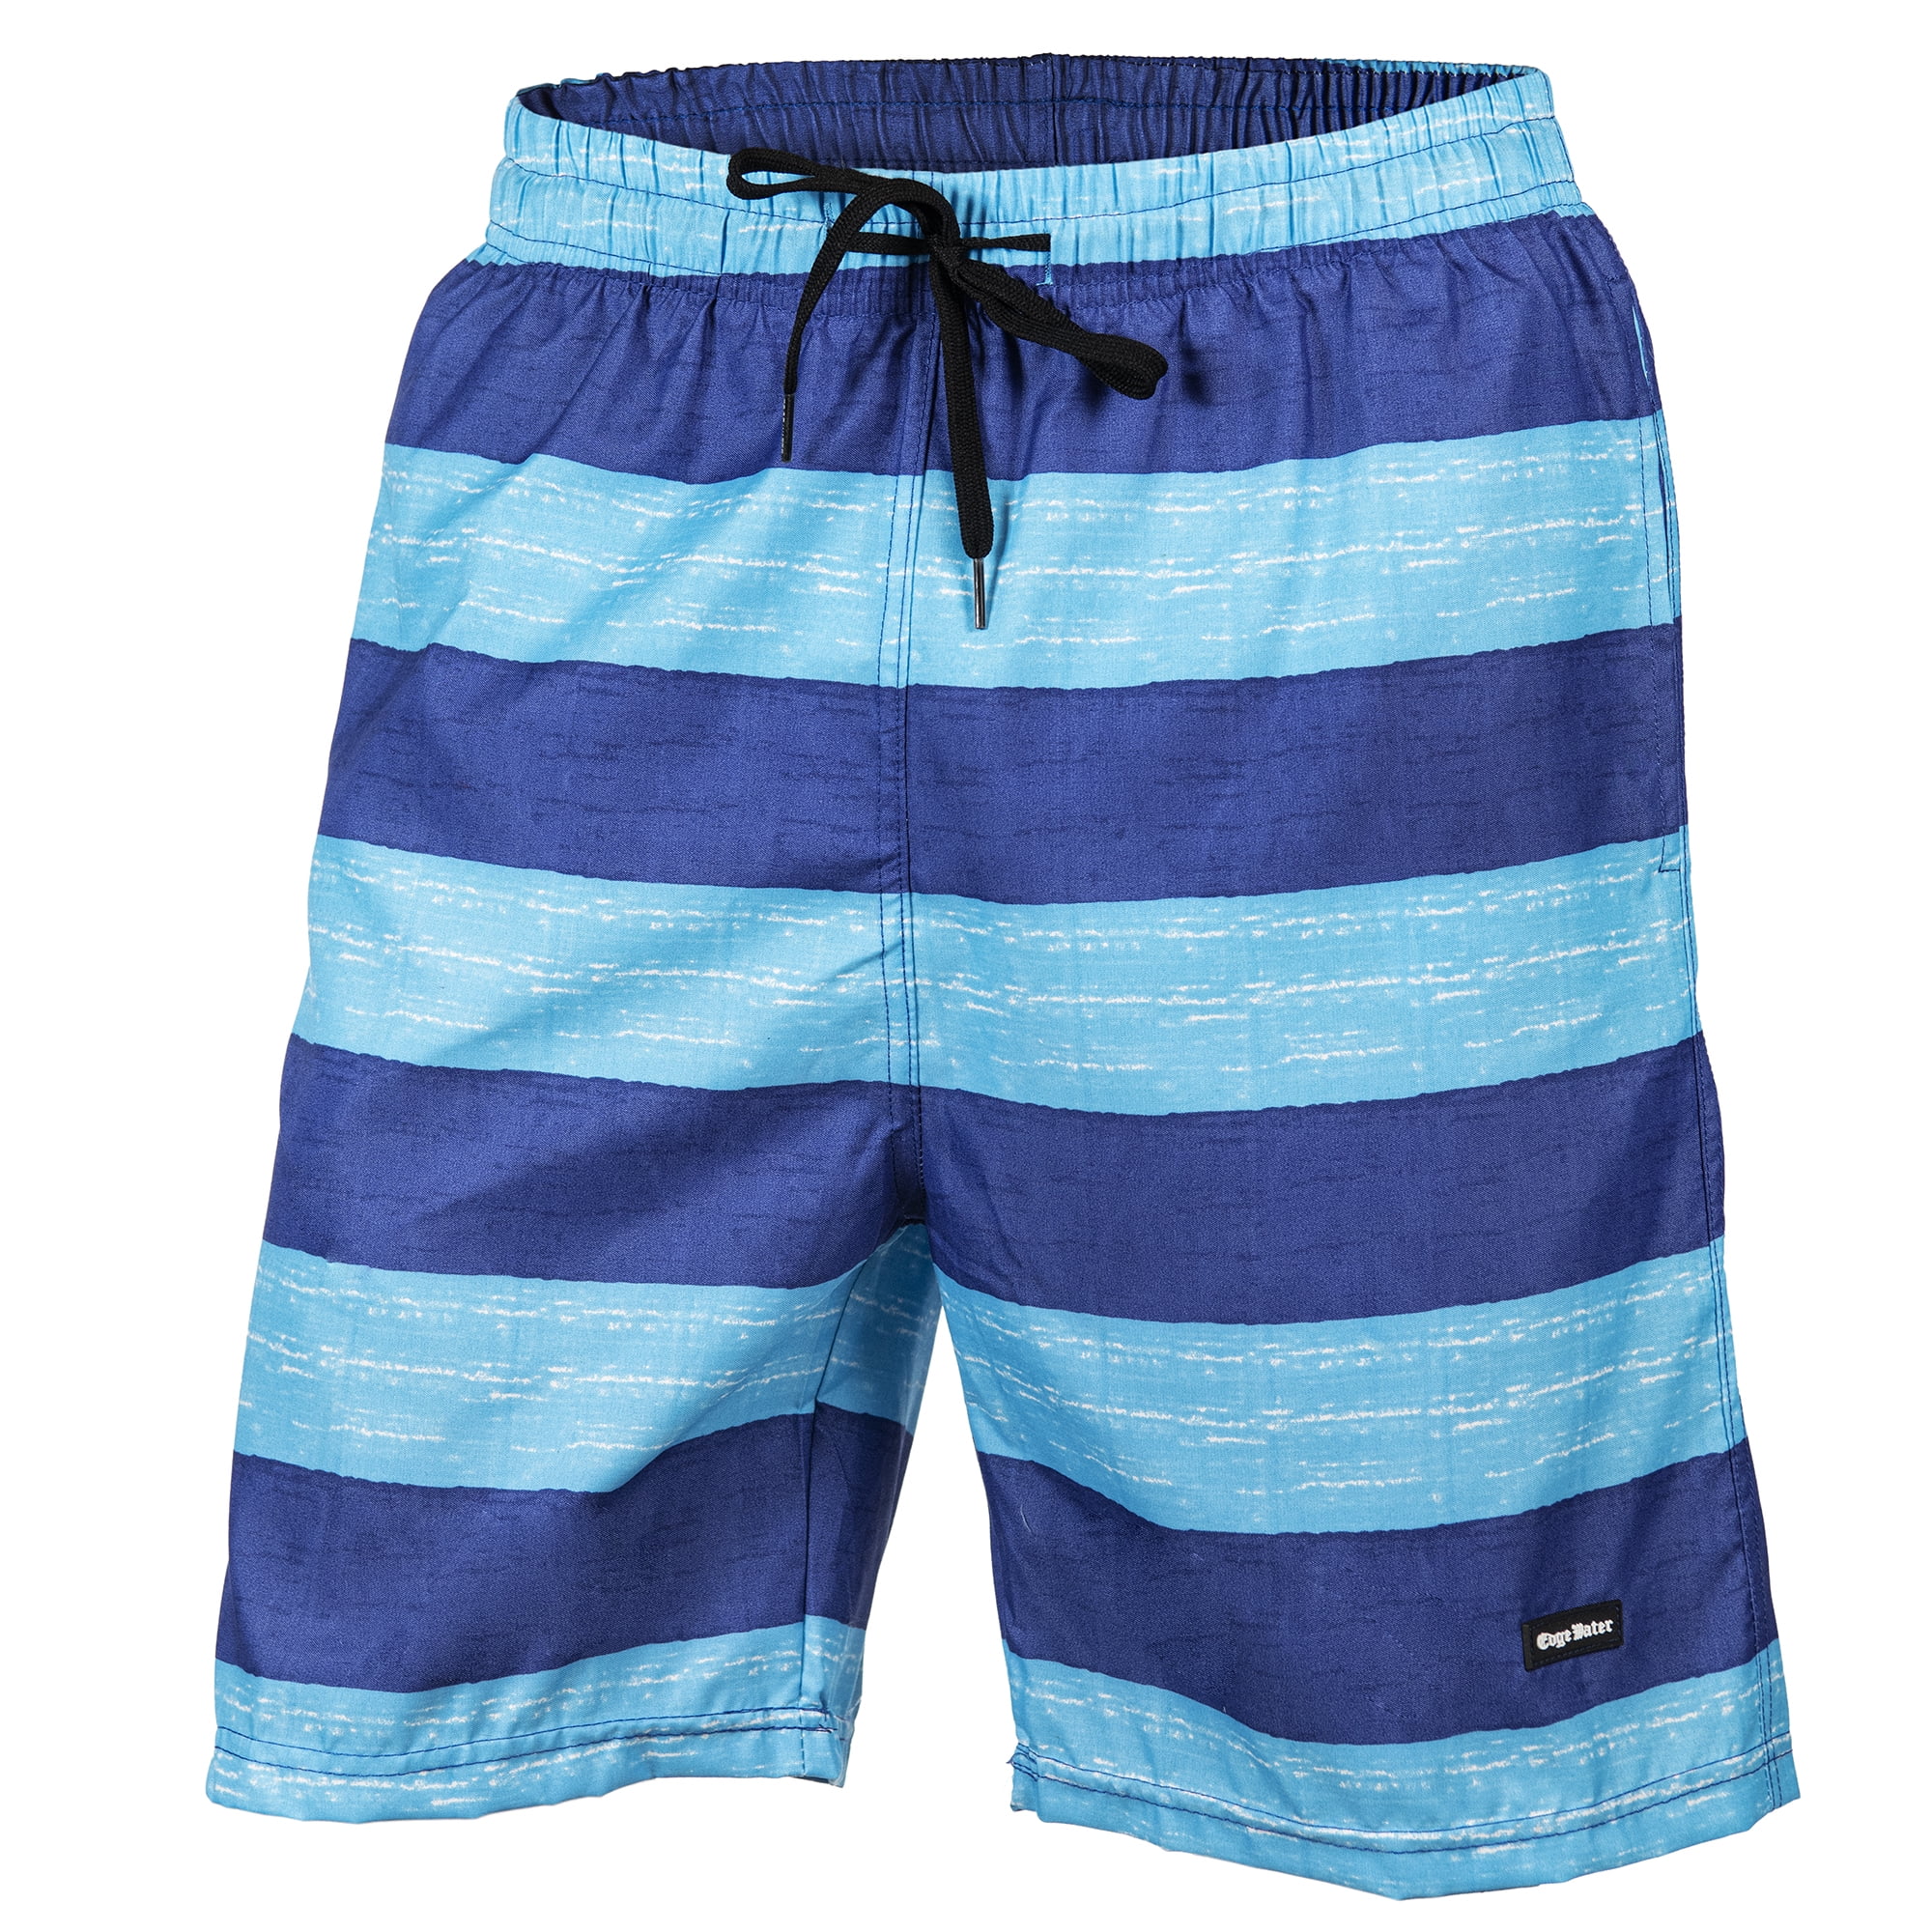 Mens University Shorts Sportwear Quick Dry Board Training Summer Swim Running Trunks Shorts Beachwear Suits with Lining 